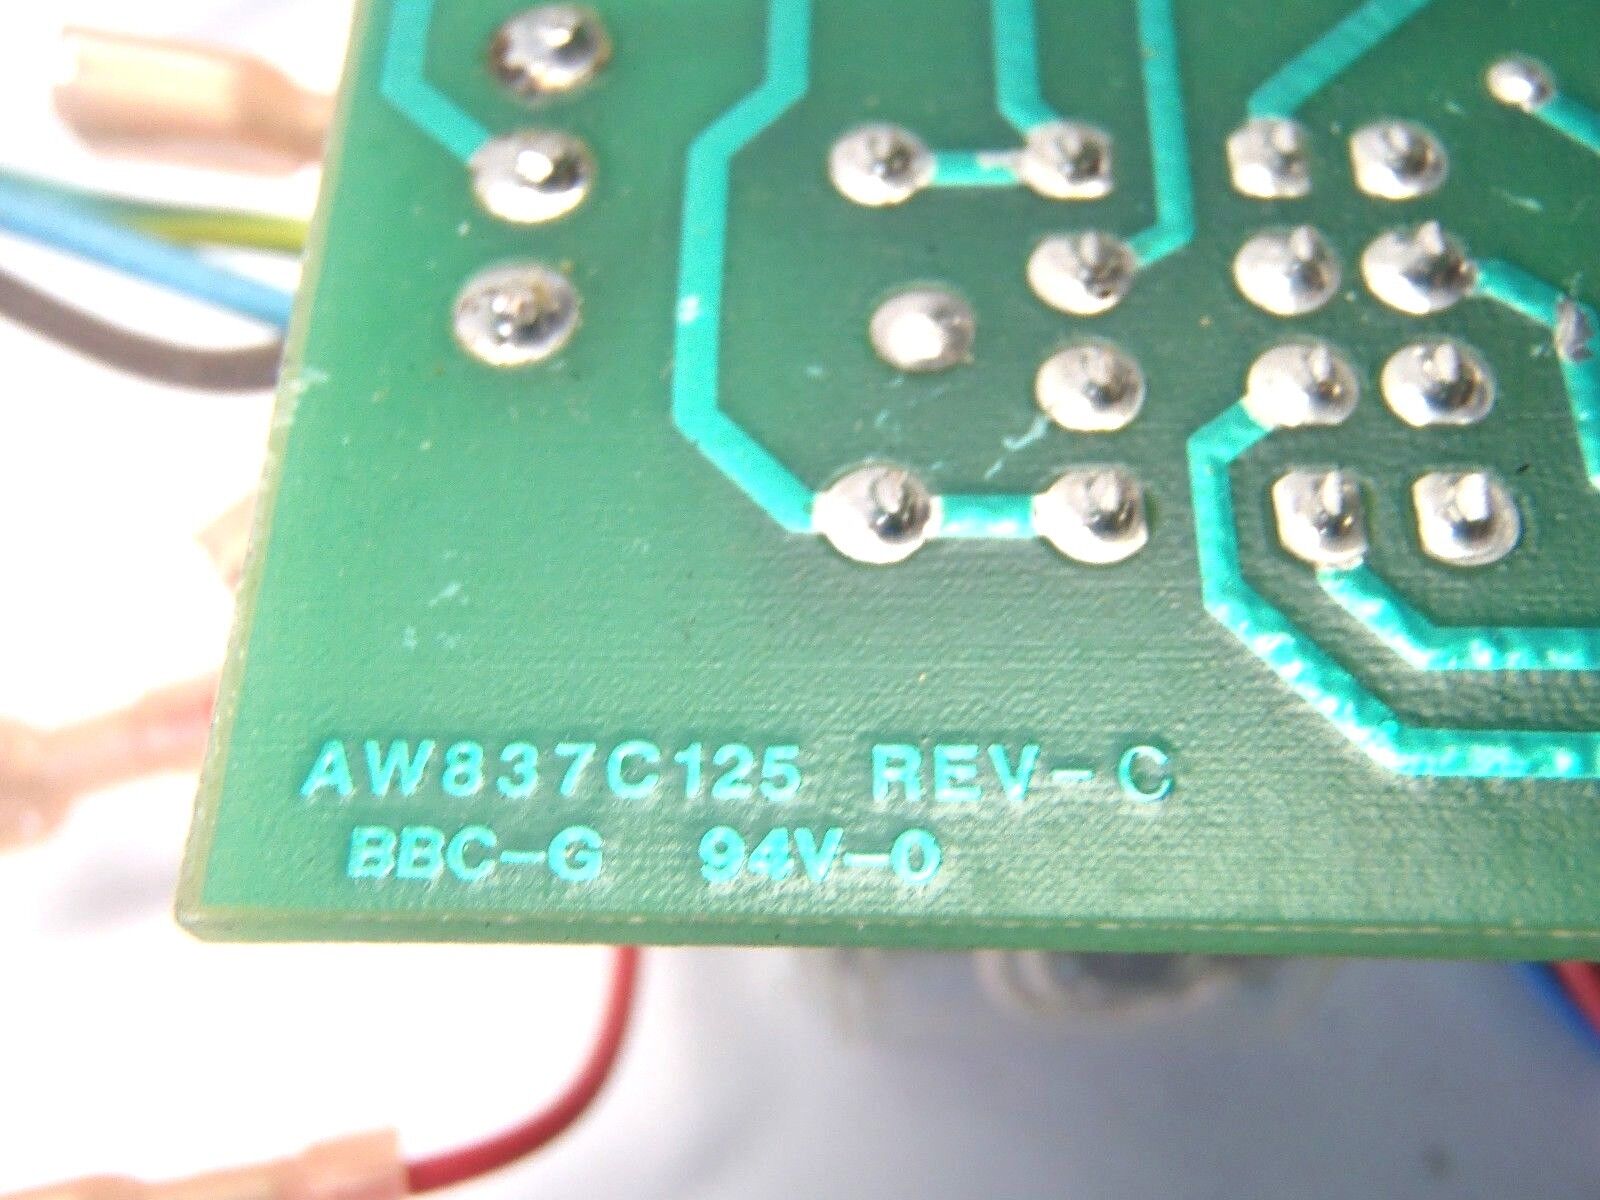 AW837C125 Rev-C BBC-G 94V-0 Power Control Board 876D059 96-43